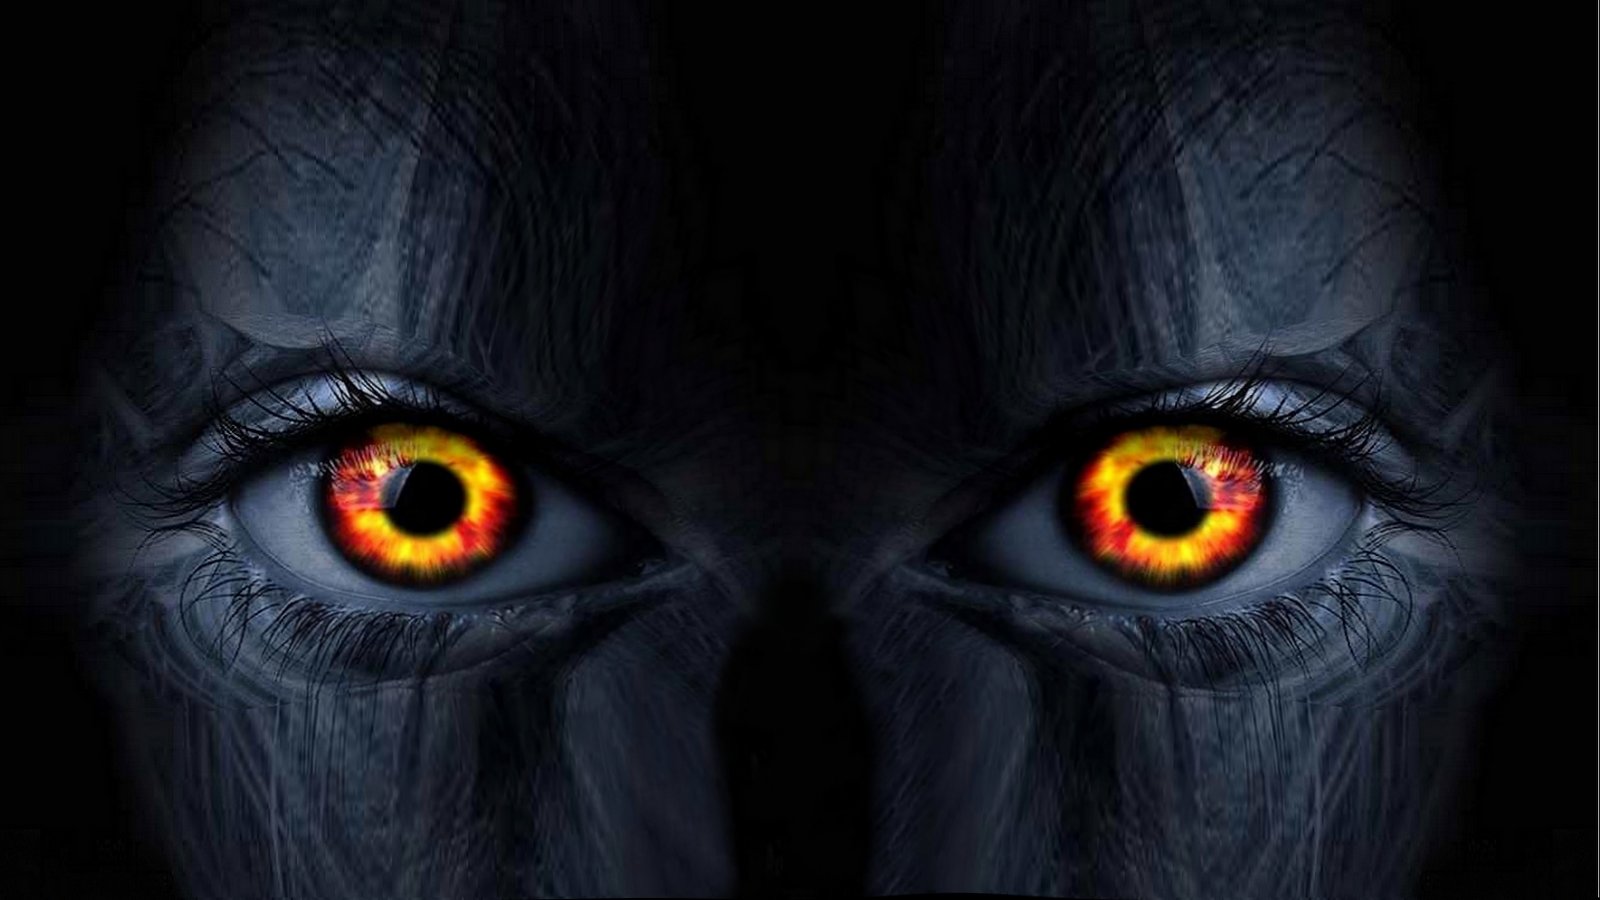 Evil eye wallpapers HD for desktop backgrounds
 Evil Eyes In Dark